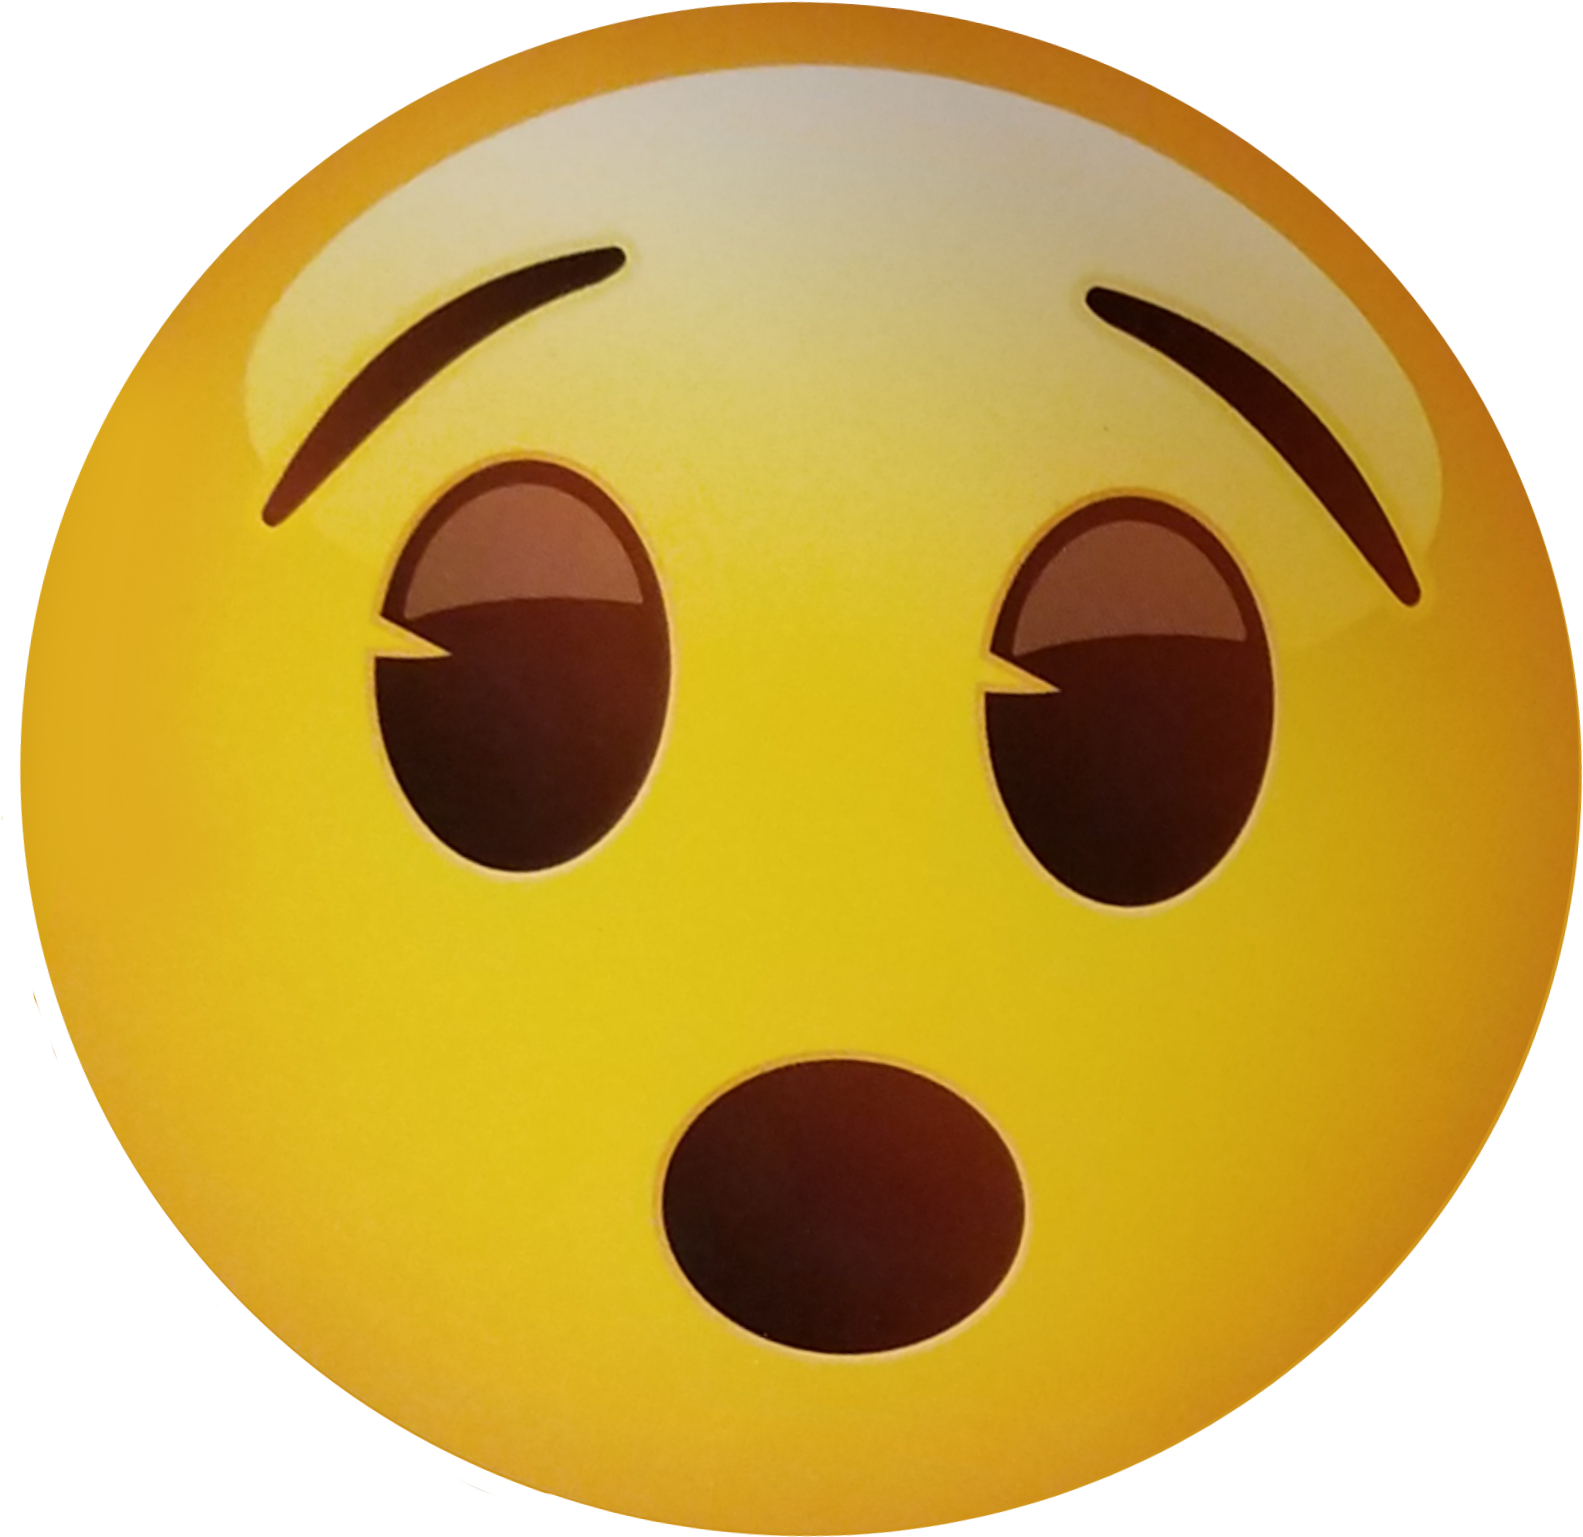 Free Smiley Face Emoji Transparent Background, Download Free Clip Art, Free Clip Art ...1583 x 1537